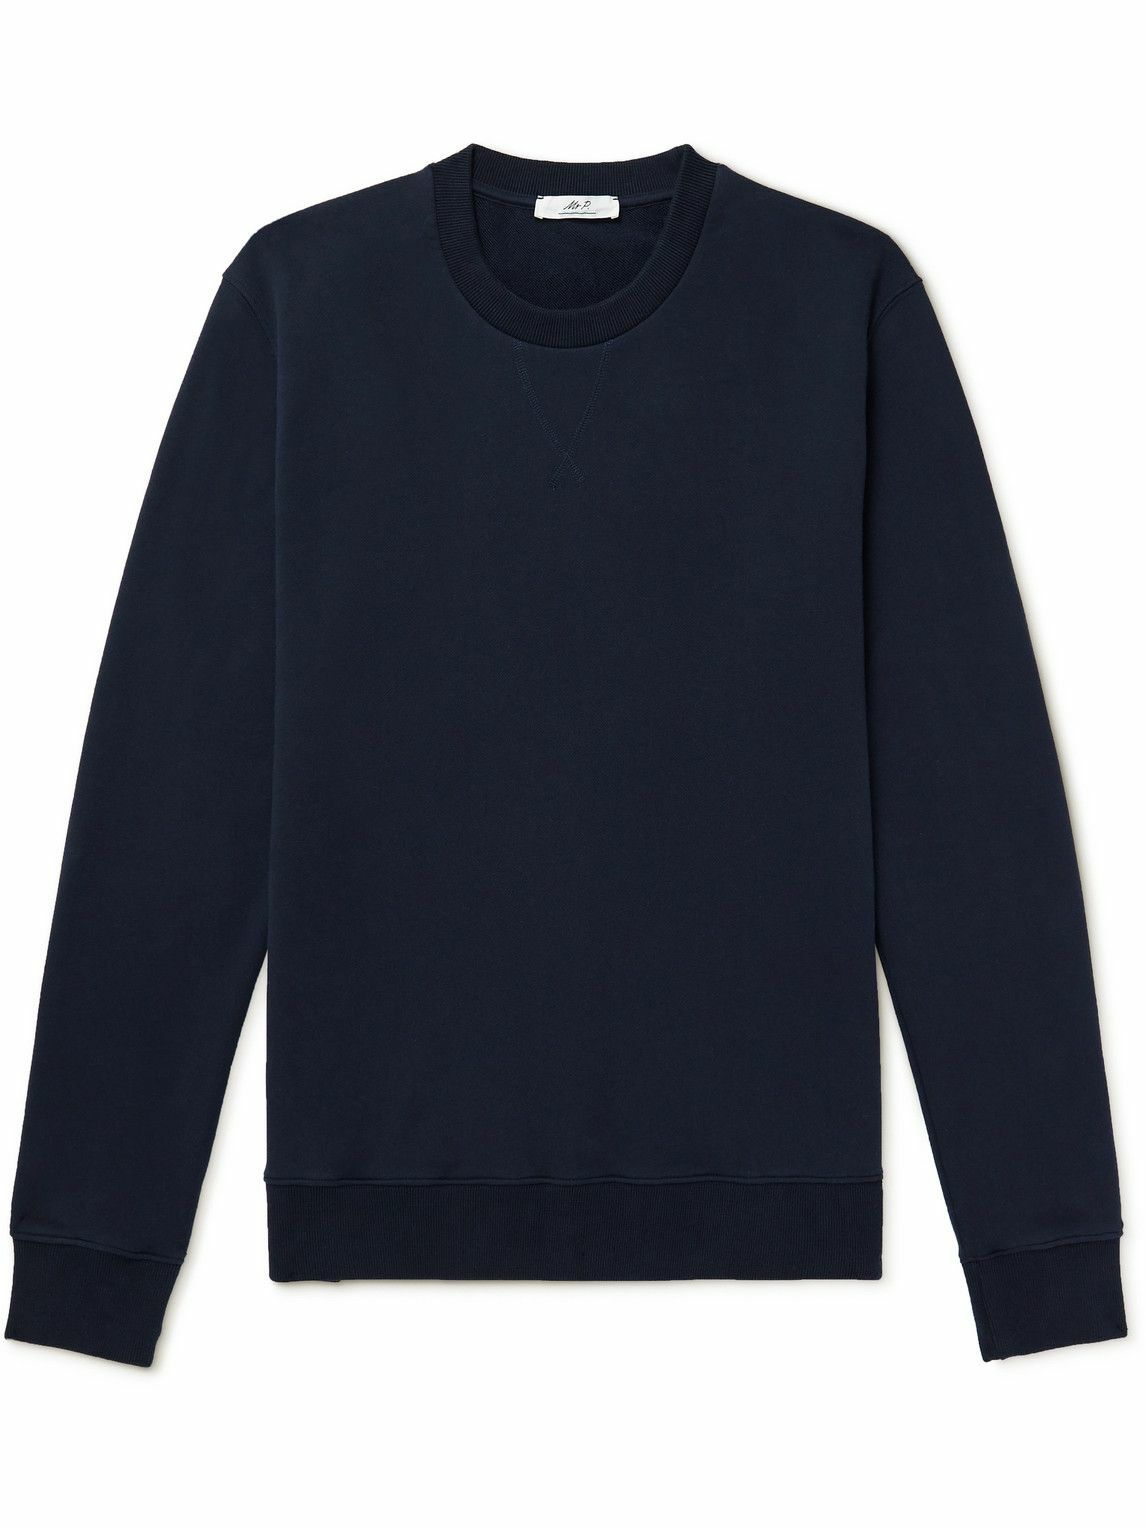 Mr P. - Cotton-Jersey Sweatshirt - Blue Mr P.